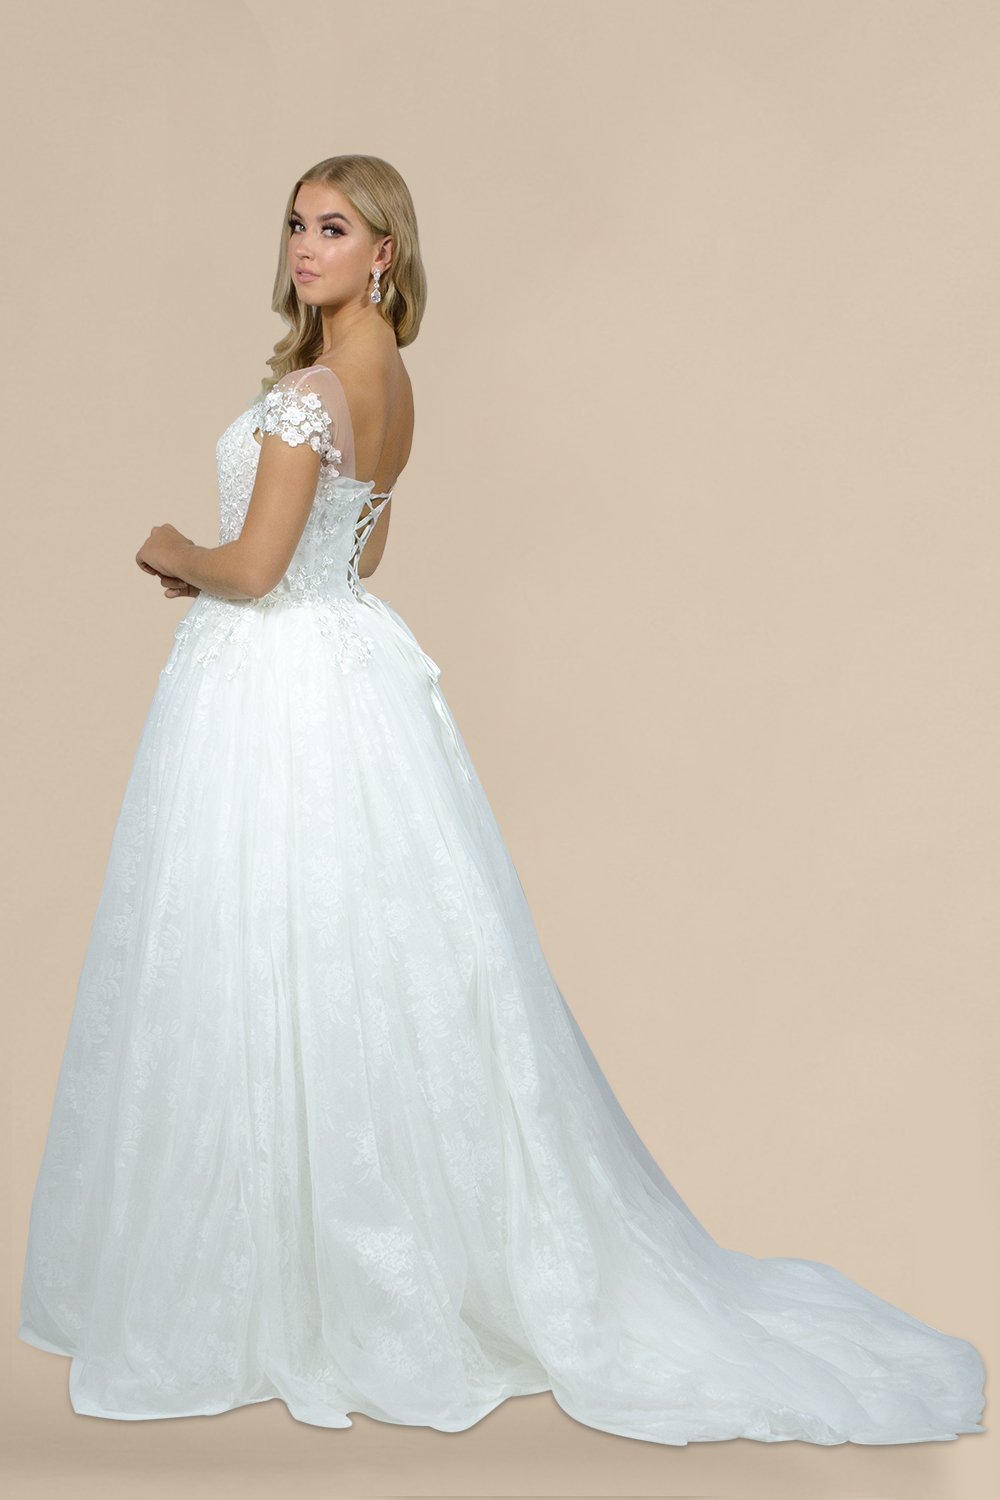 custom made princess gown wedding dresses dressmaker perth australia envious bridal & formal